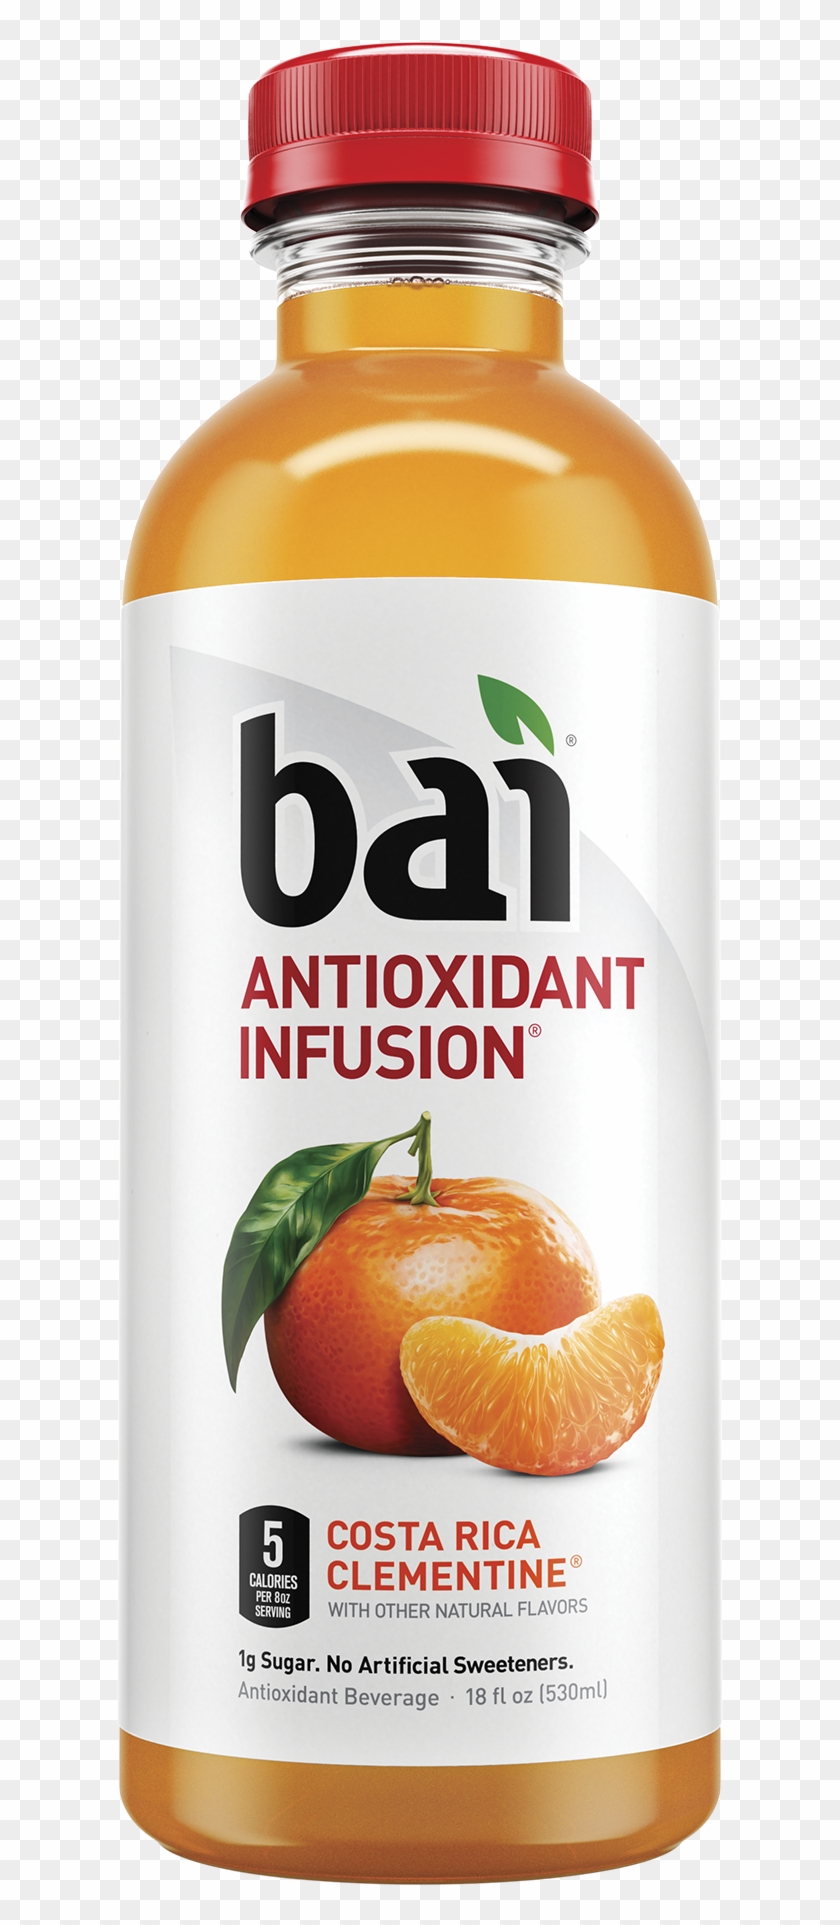 Bai Antioxidant Infused Beverage, Costa Rica Clementine, - Costa Rica Clementine Clipart #5205723